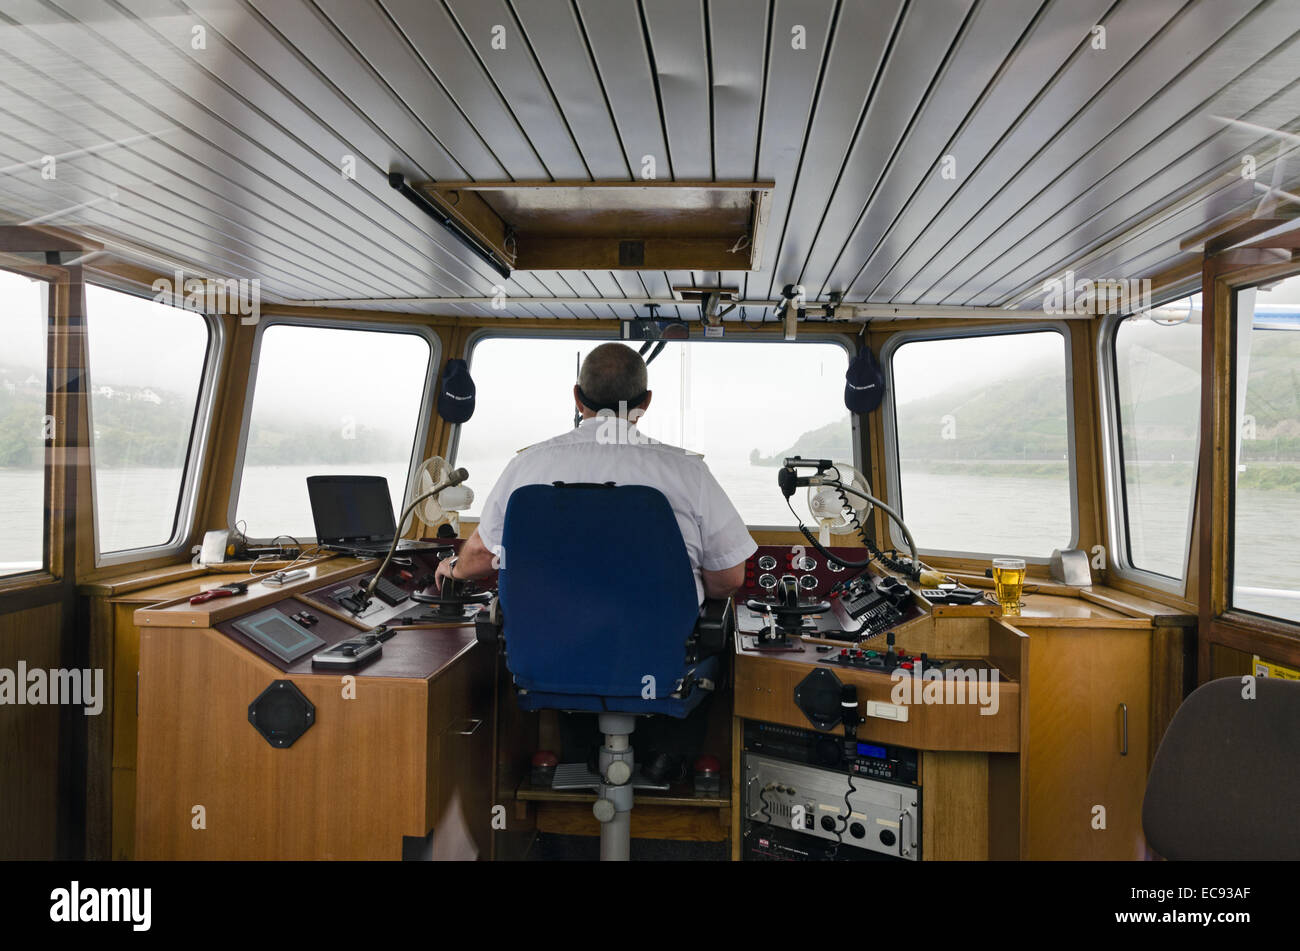 RHINE RIVER, GERMANY - SEPTEMBER 24: helmsman of a passenger ship in control room in September 24, 2013 in Rhine river, Germany. Stock Photo